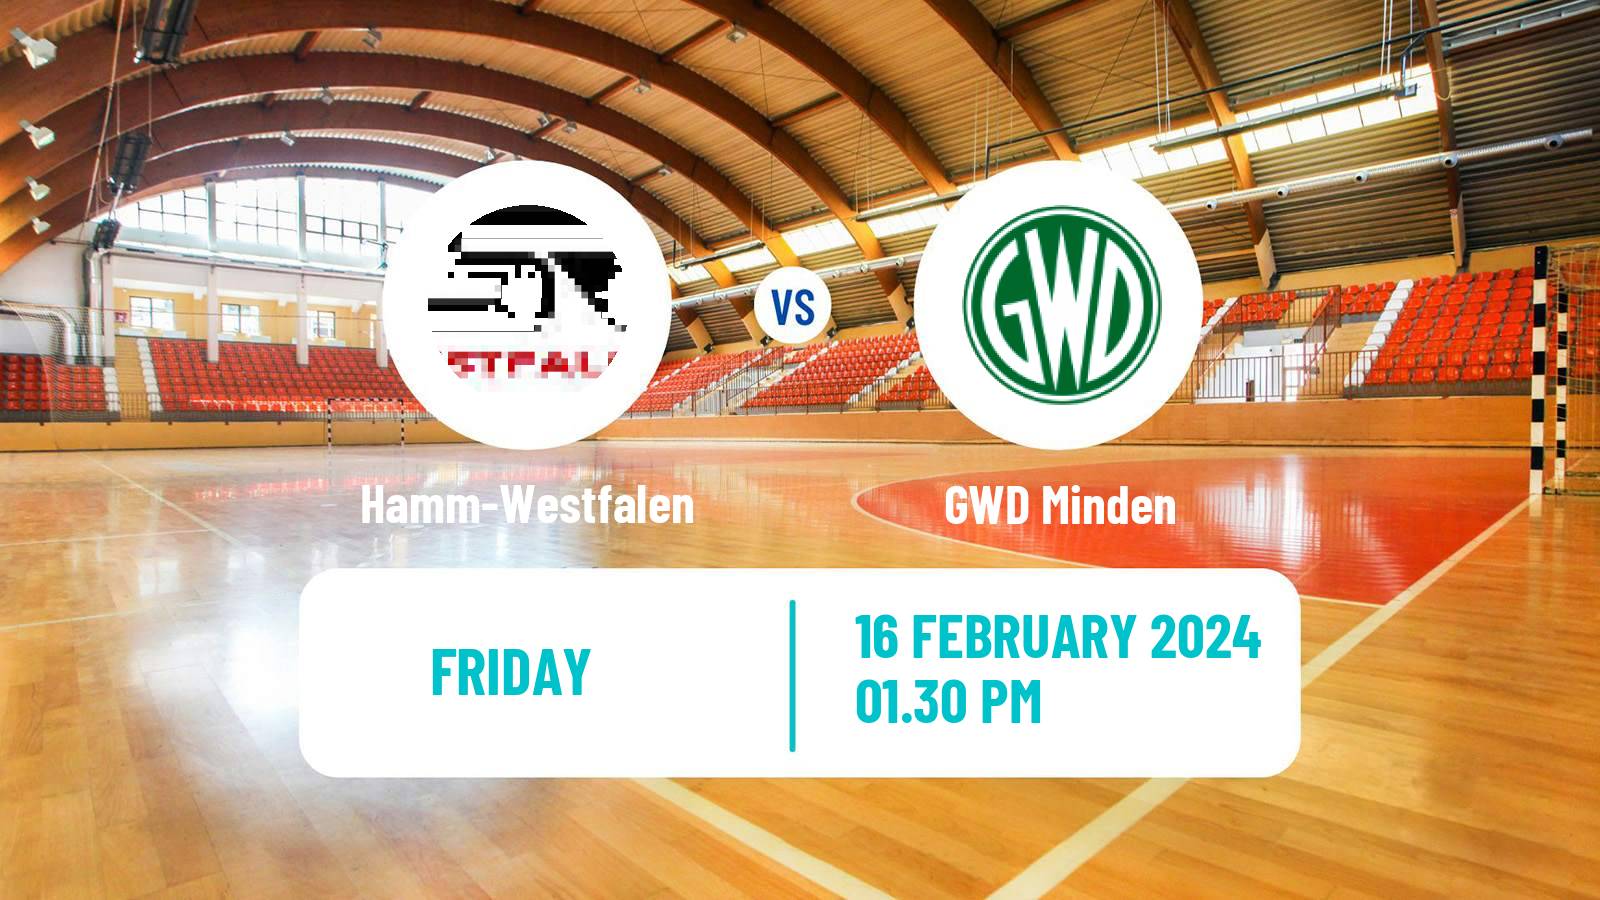 Handball German 2 Bundesliga Handball Hamm-Westfalen - GWD Minden